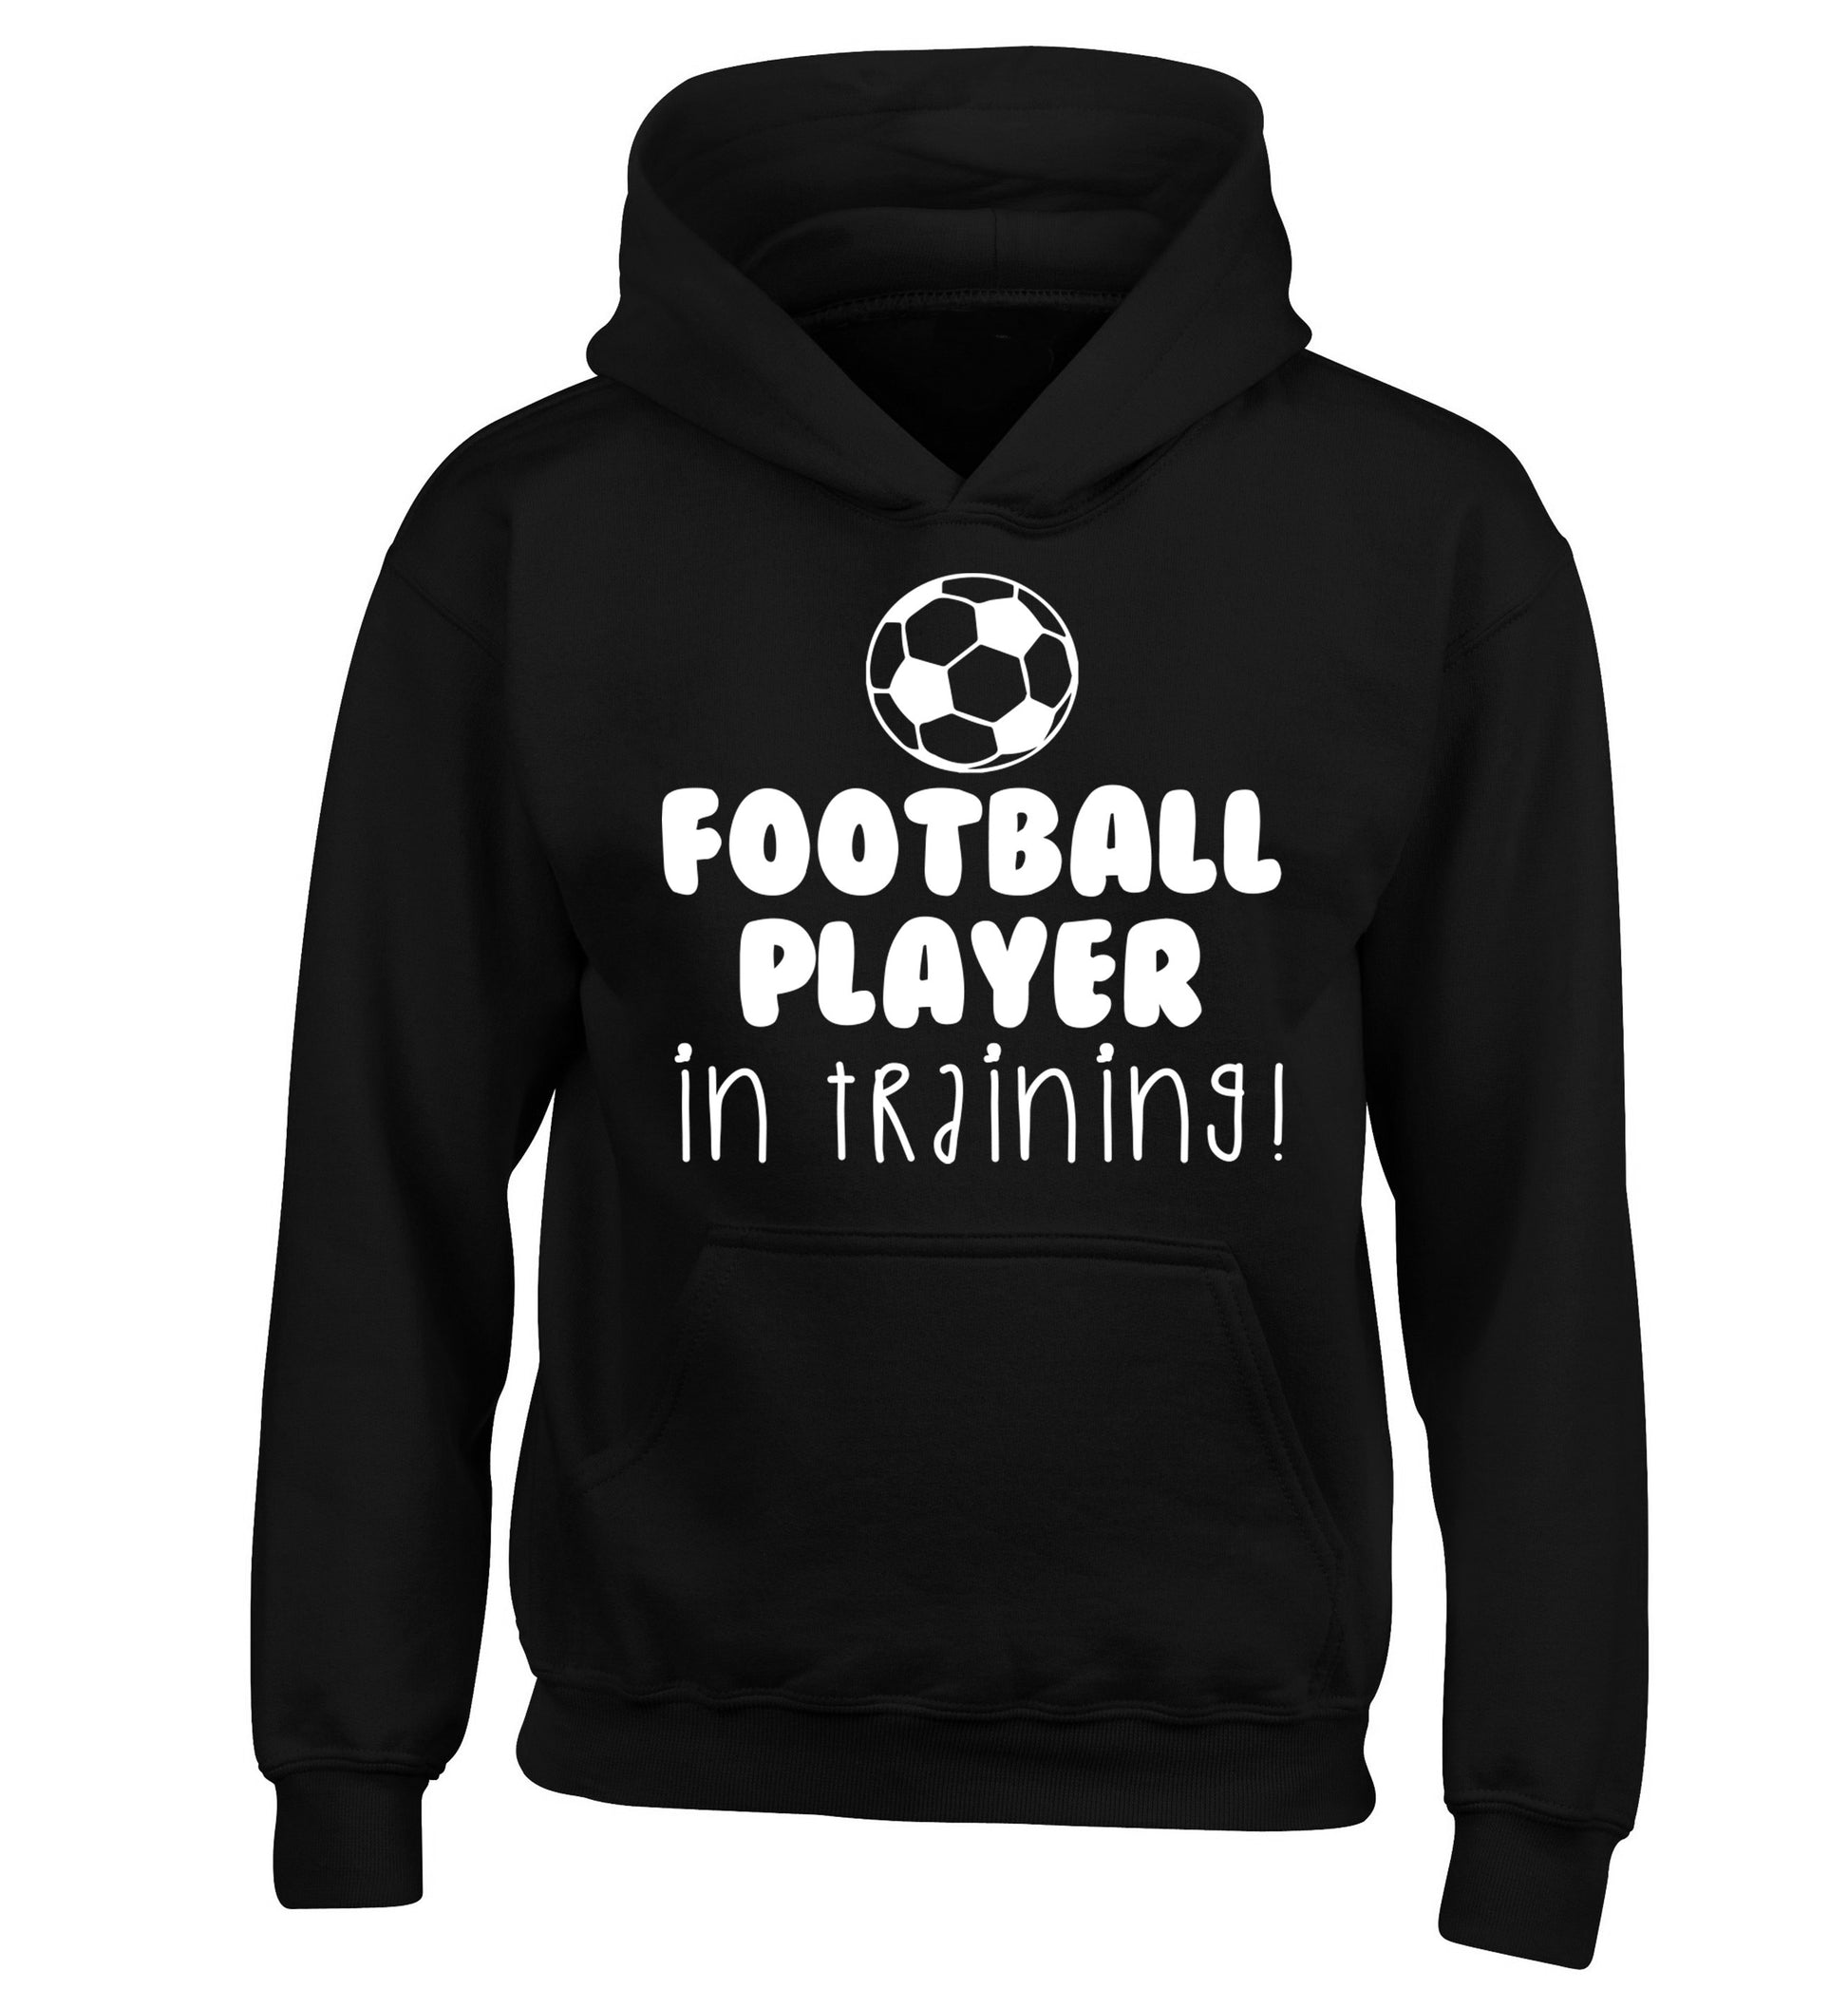 Football player in training children's black hoodie 12-14 Years